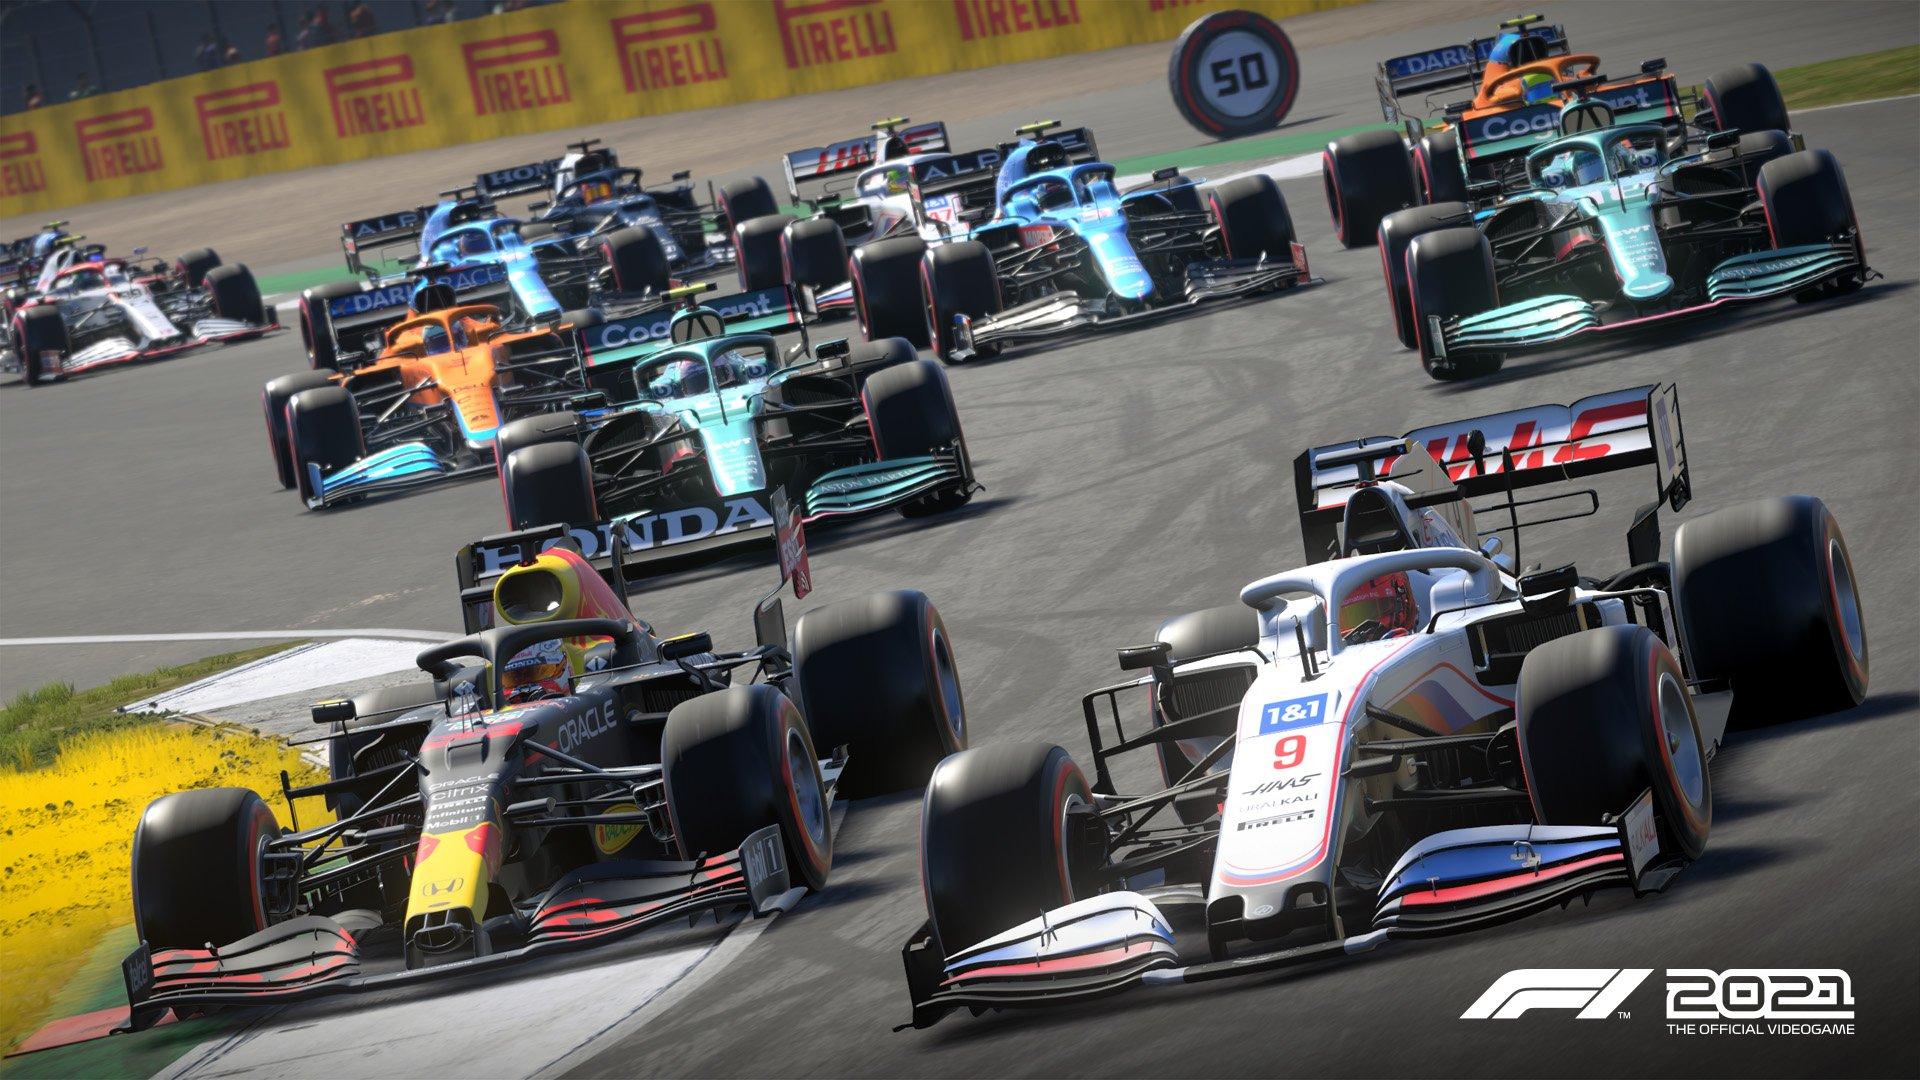 Electronic arts PS4 Formula 1 2021